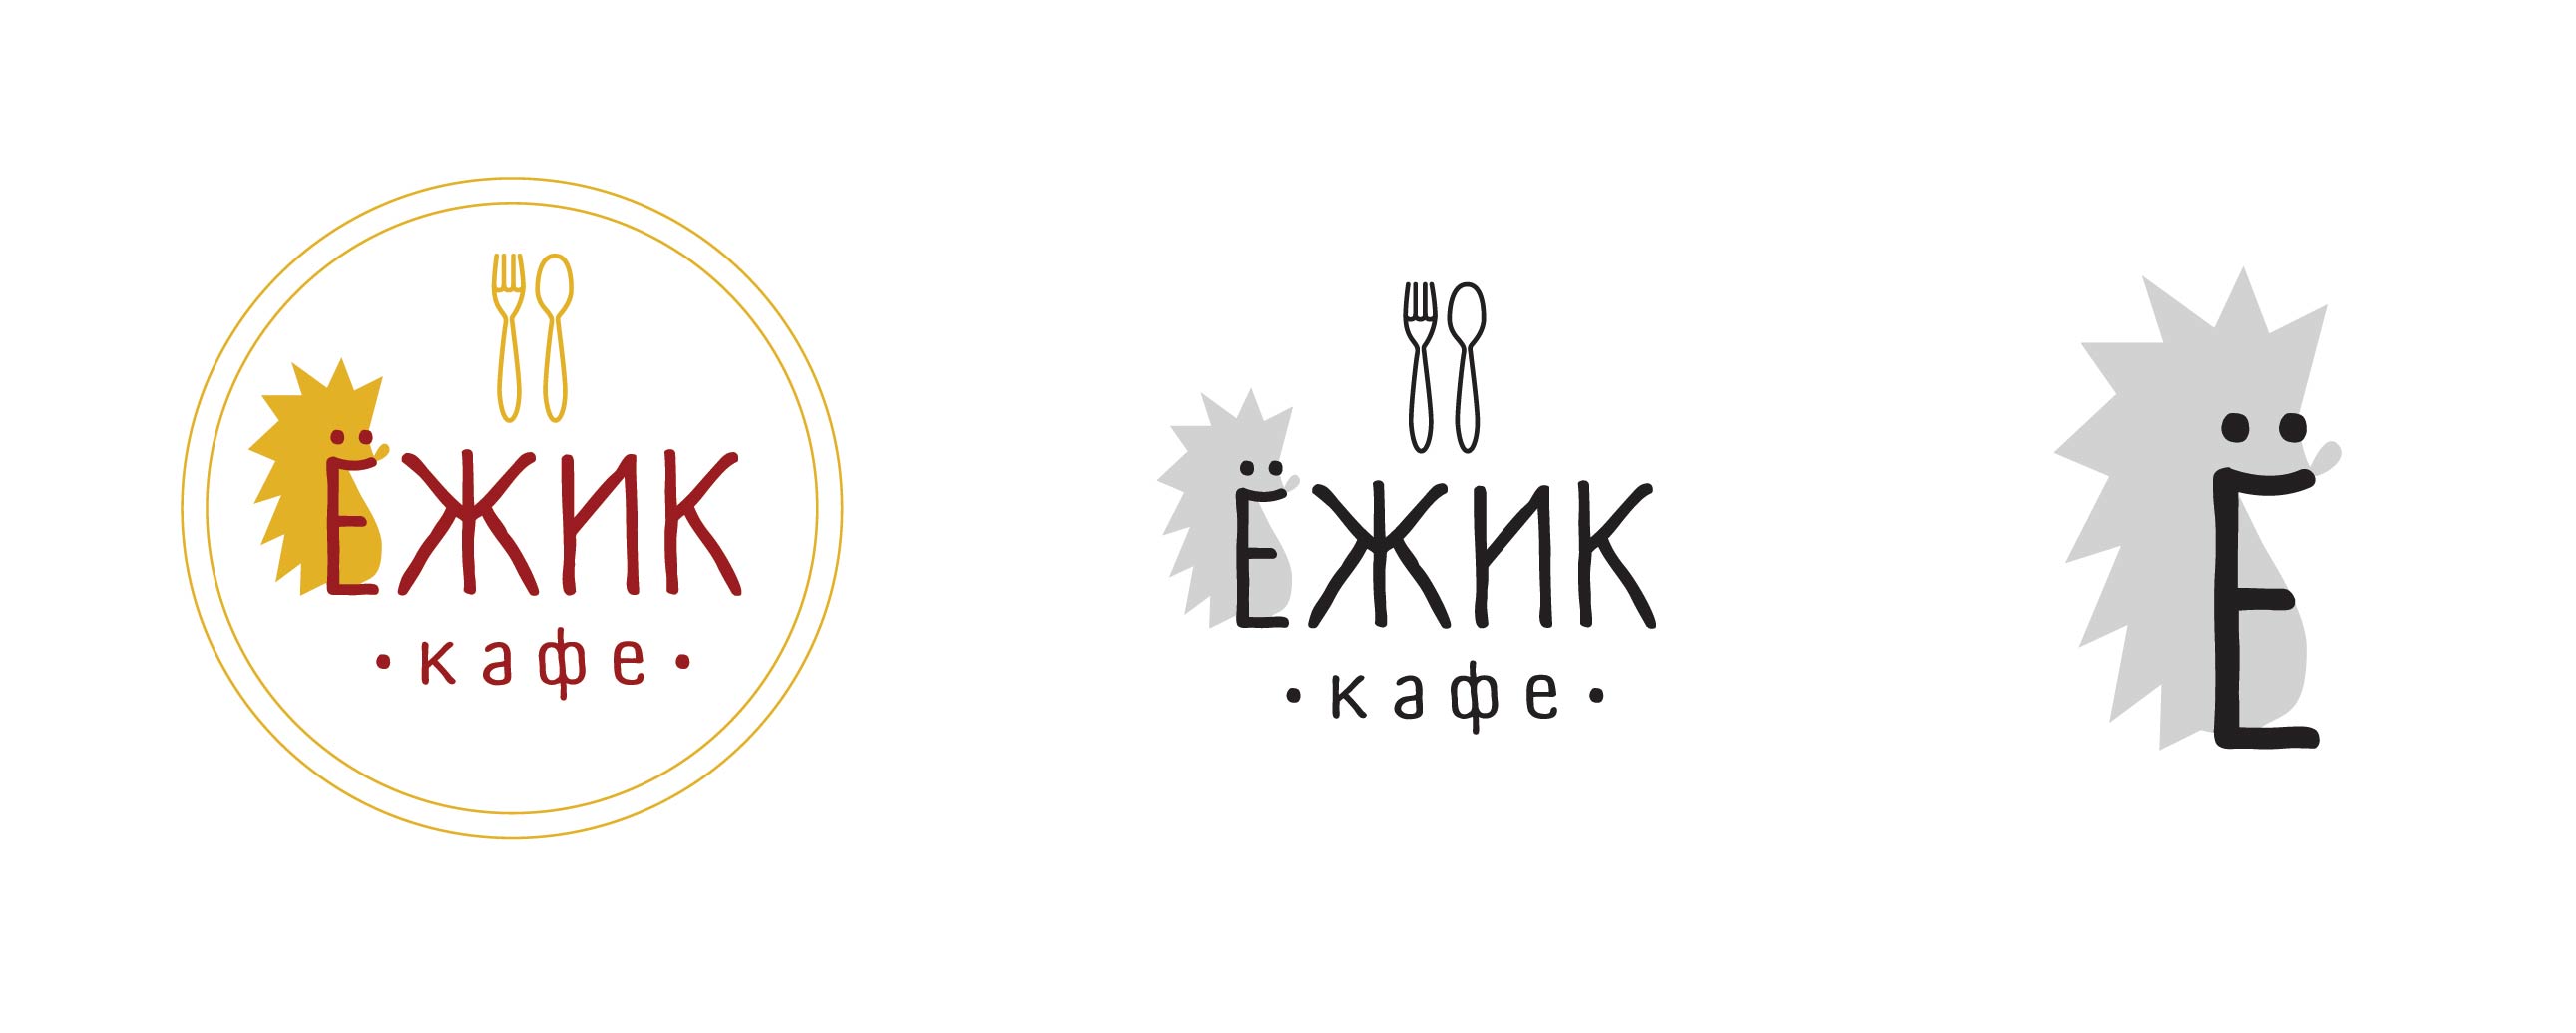 Ежик ресторан. Логотип кафе Ёжик. Ресторан еж логотип. Ёже кафе логотип. Лого для свадебного ресторана.